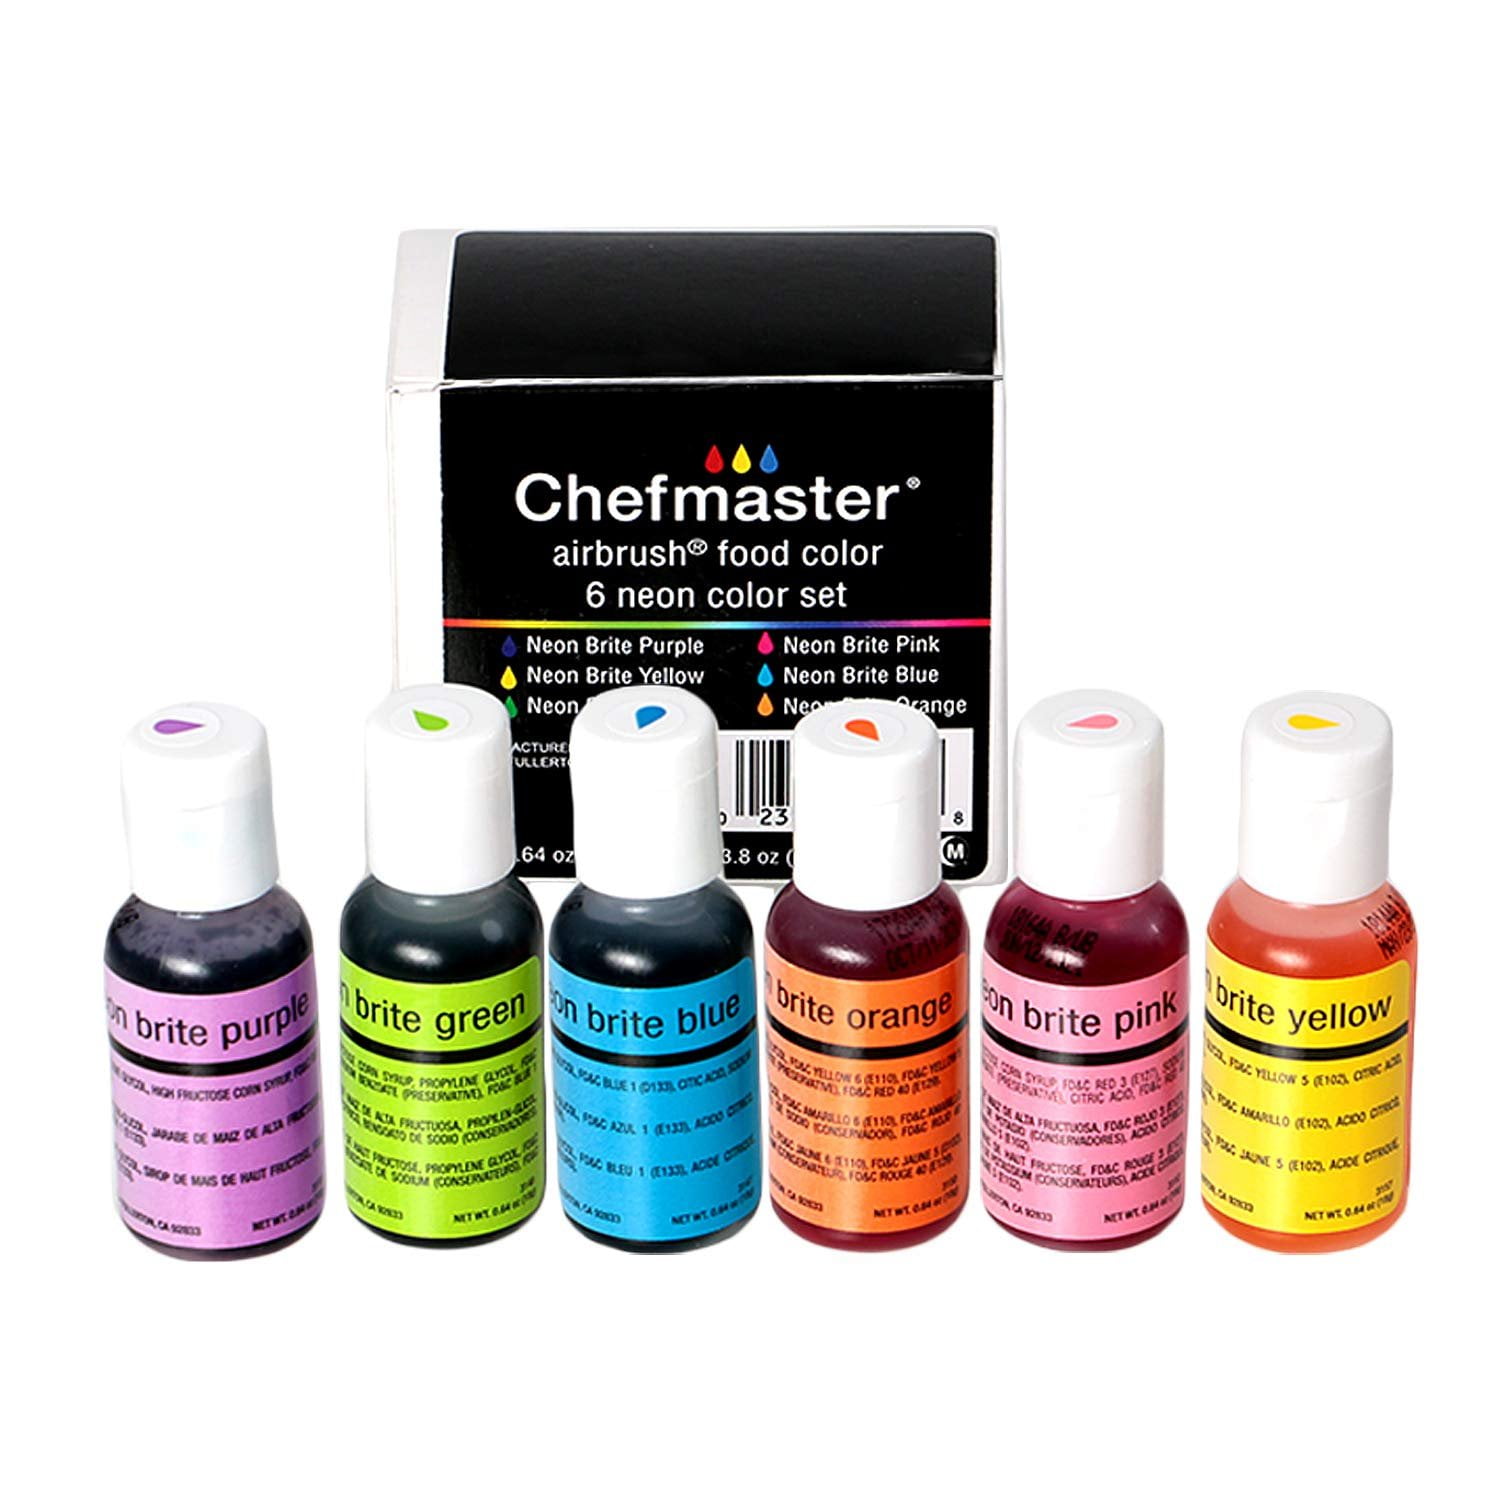 Chefmaster Air Brush Color Variety Pack Twelve 2 oz. Bottles